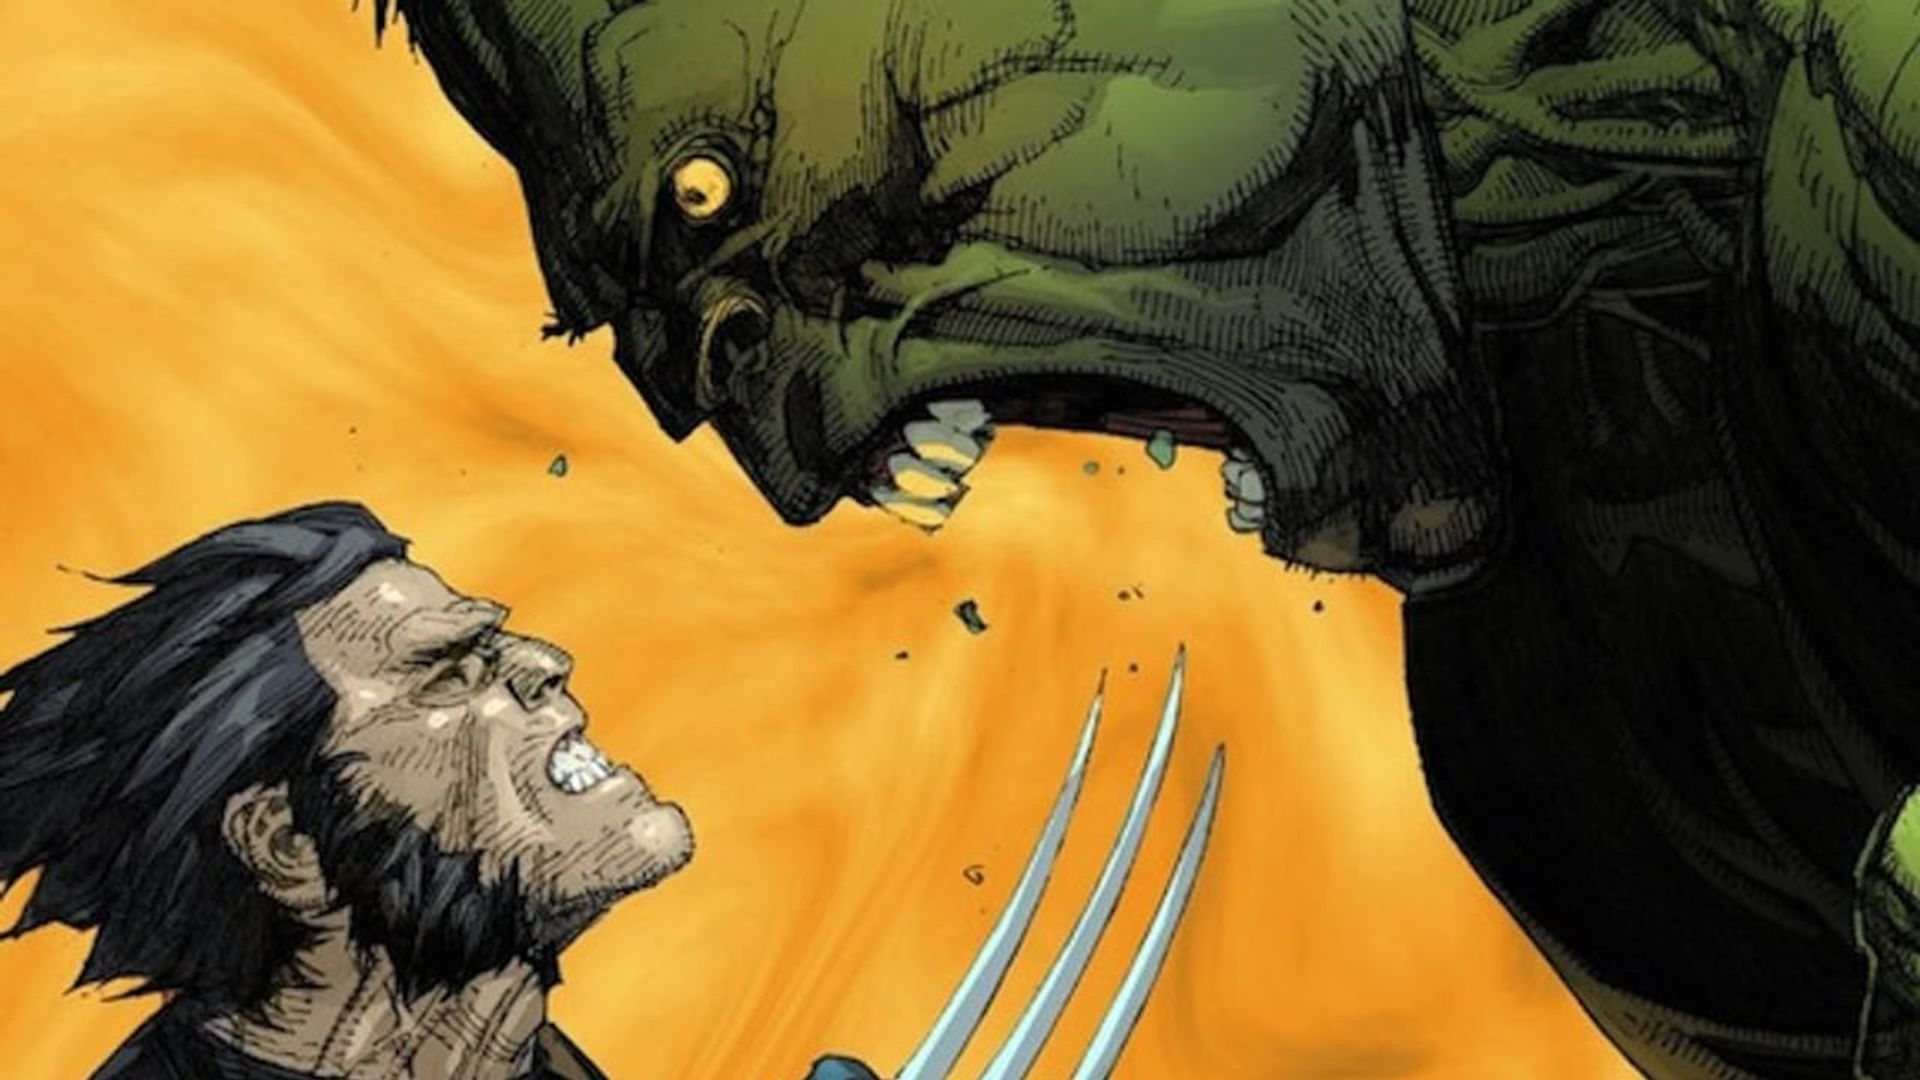 Ultimate Wolverine vs. Hulk background